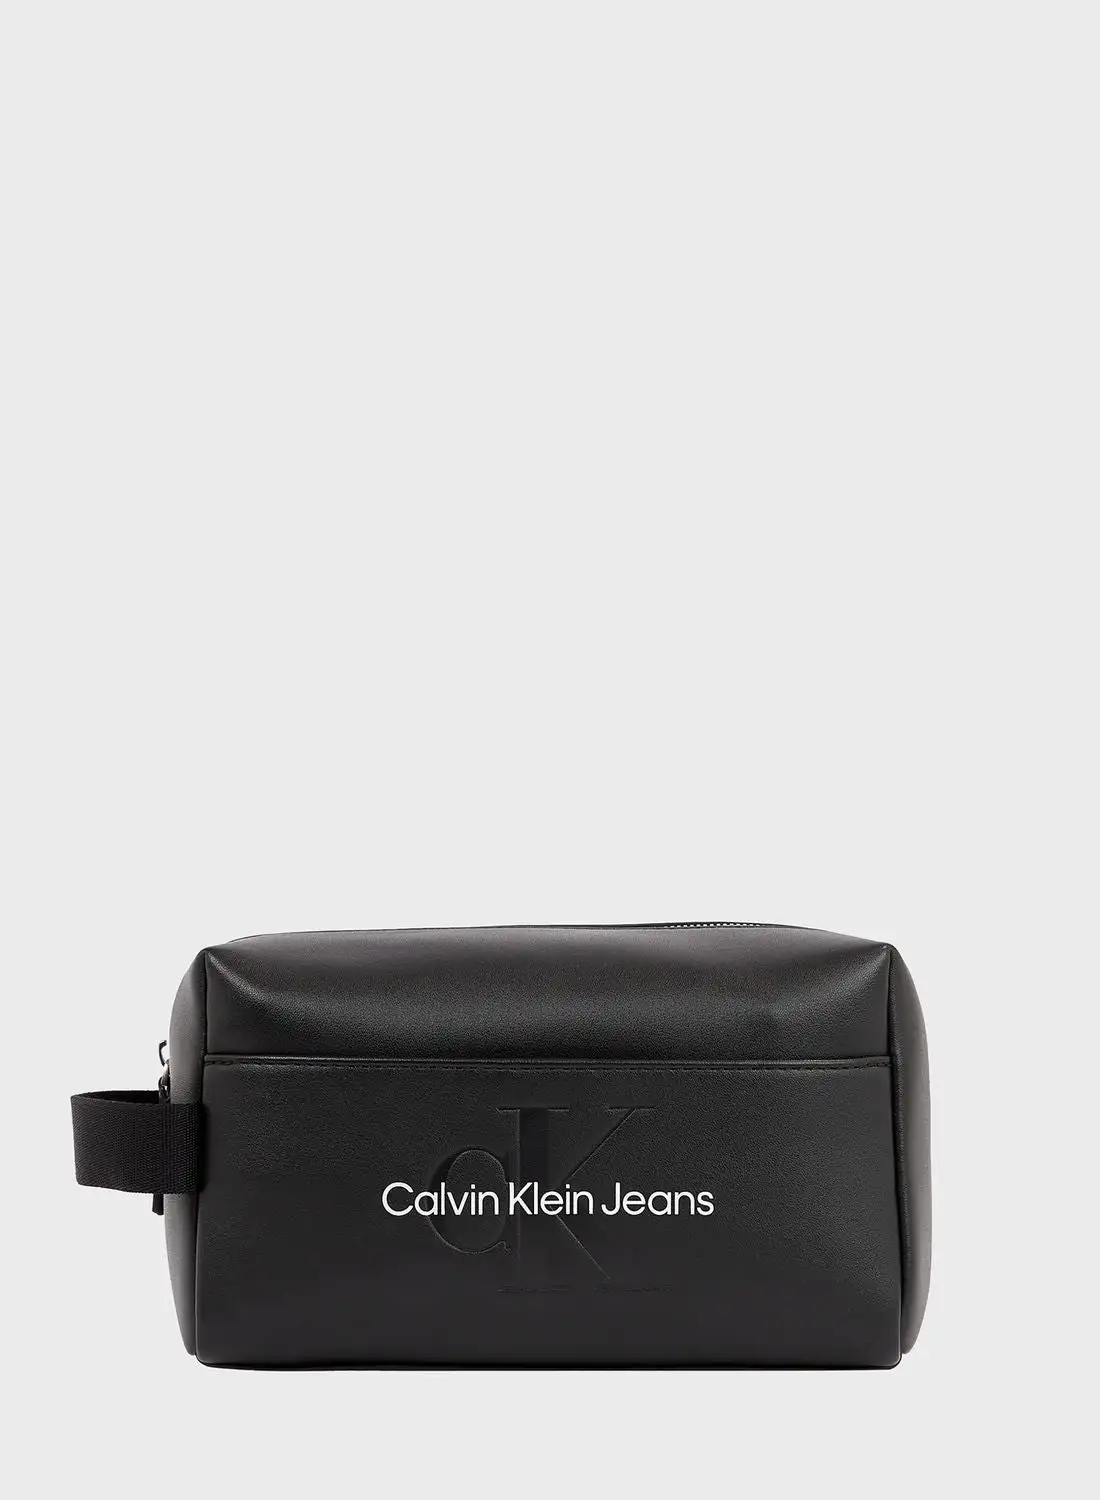 Calvin Klein Jeans Sculpted Beauty Case Wallet